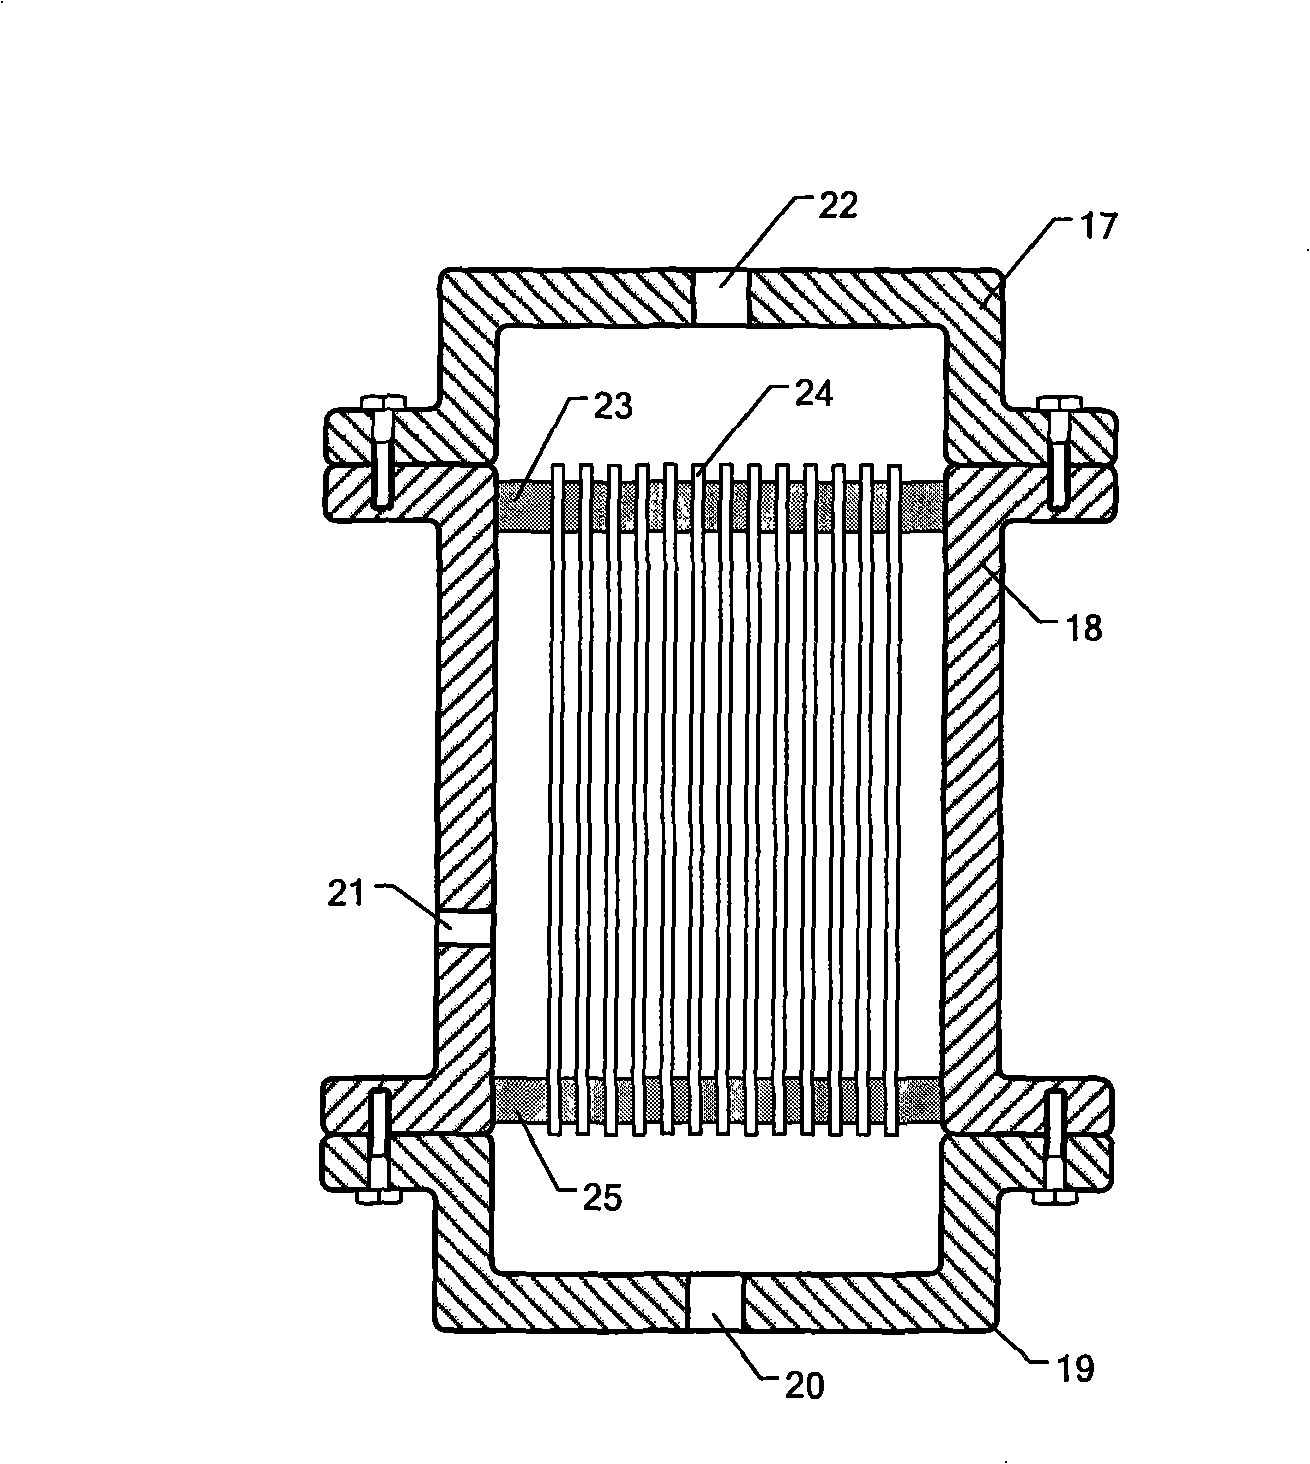 Absorption type refrigerator employing film distillation technology